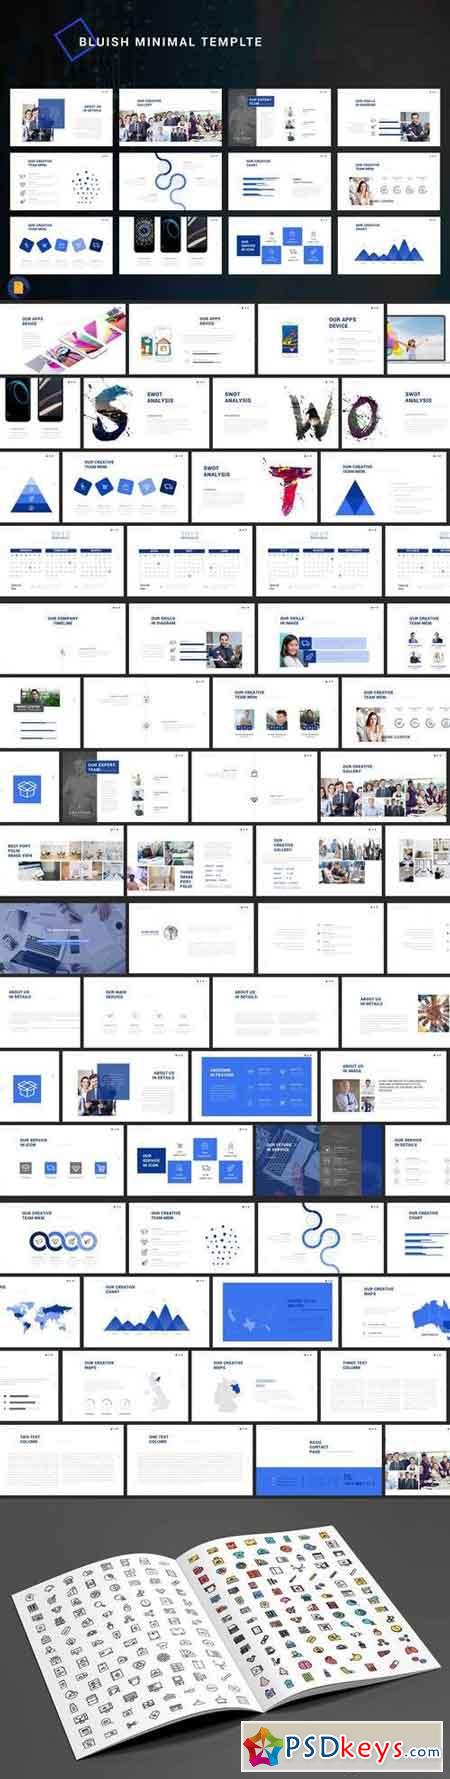 Bluish Google Slide Template